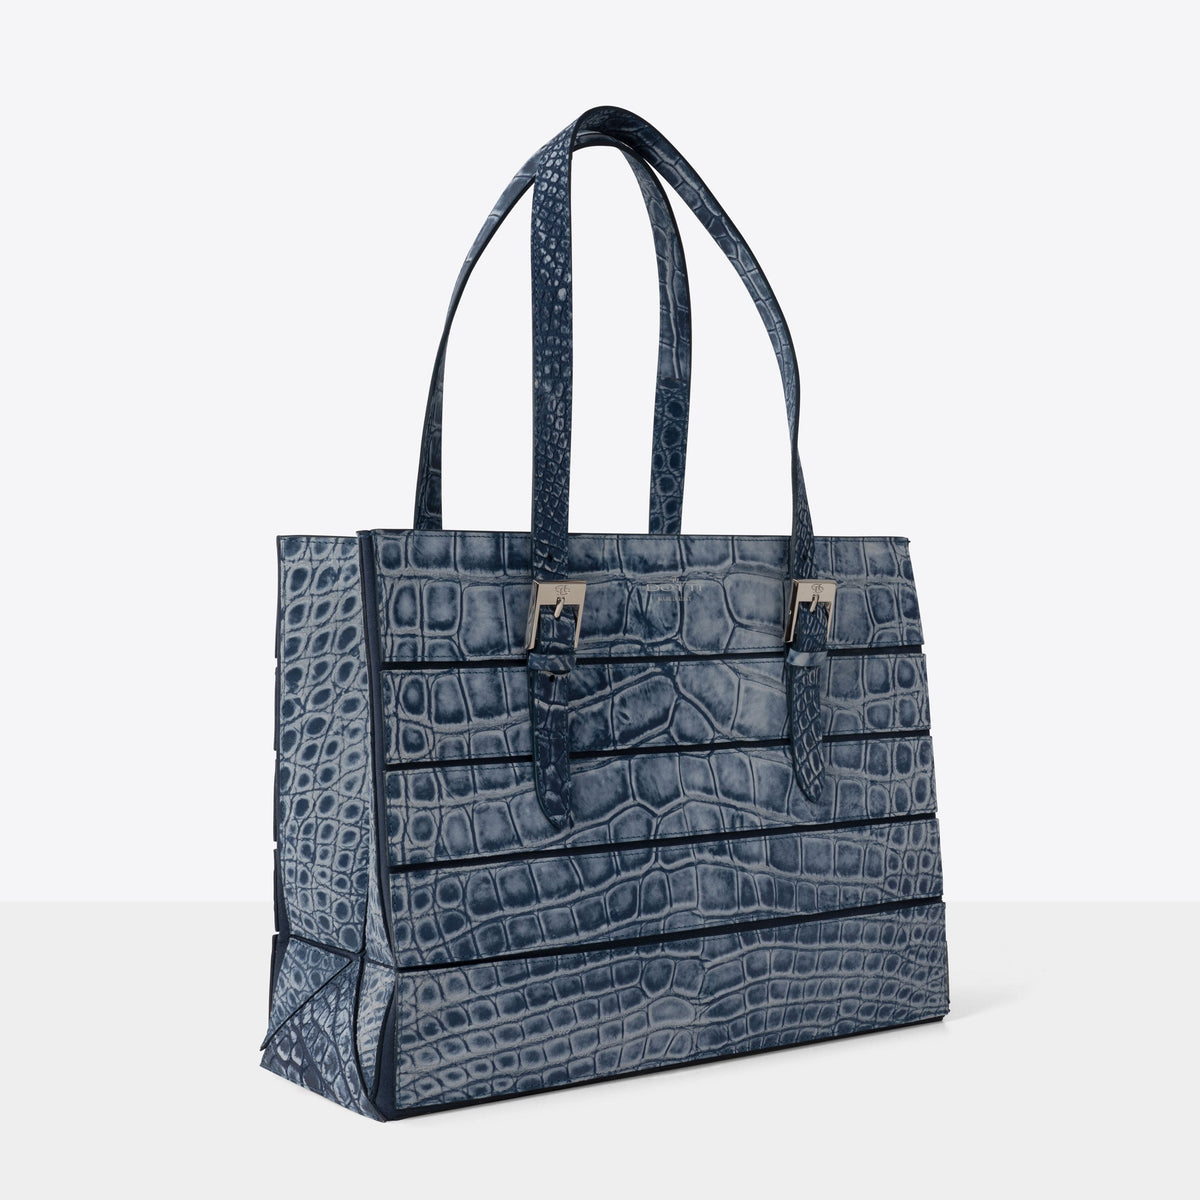 DOTTI Flora in Denim Crocodile, Luxury Handbags. Made in Italy